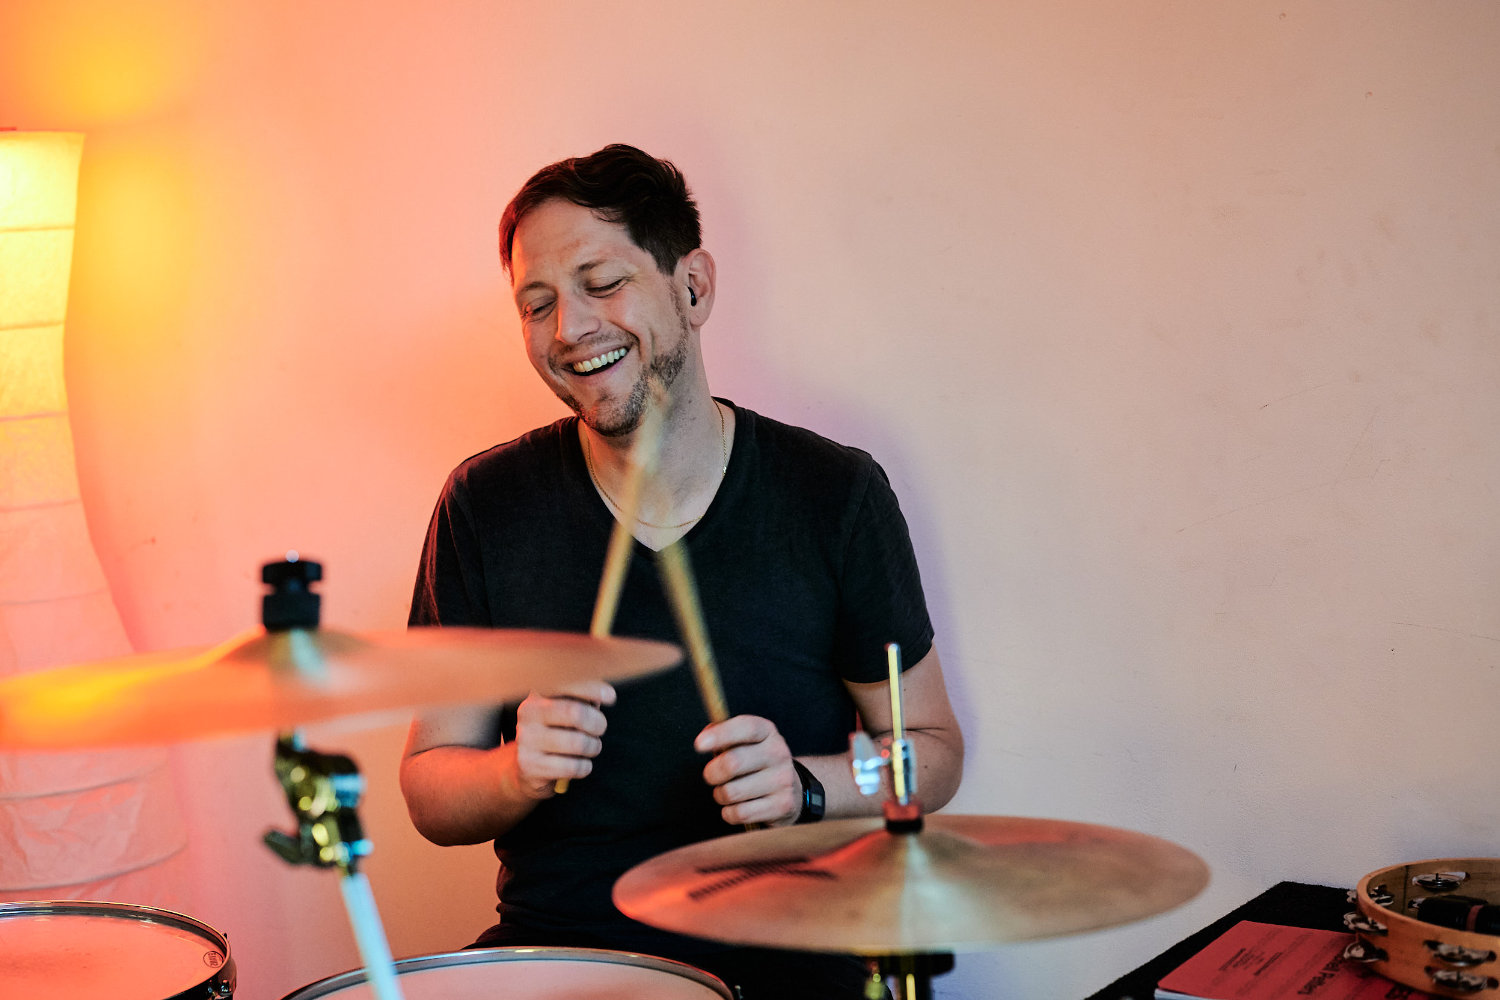 Christoph Keding am Schlagzeug mit Shaker